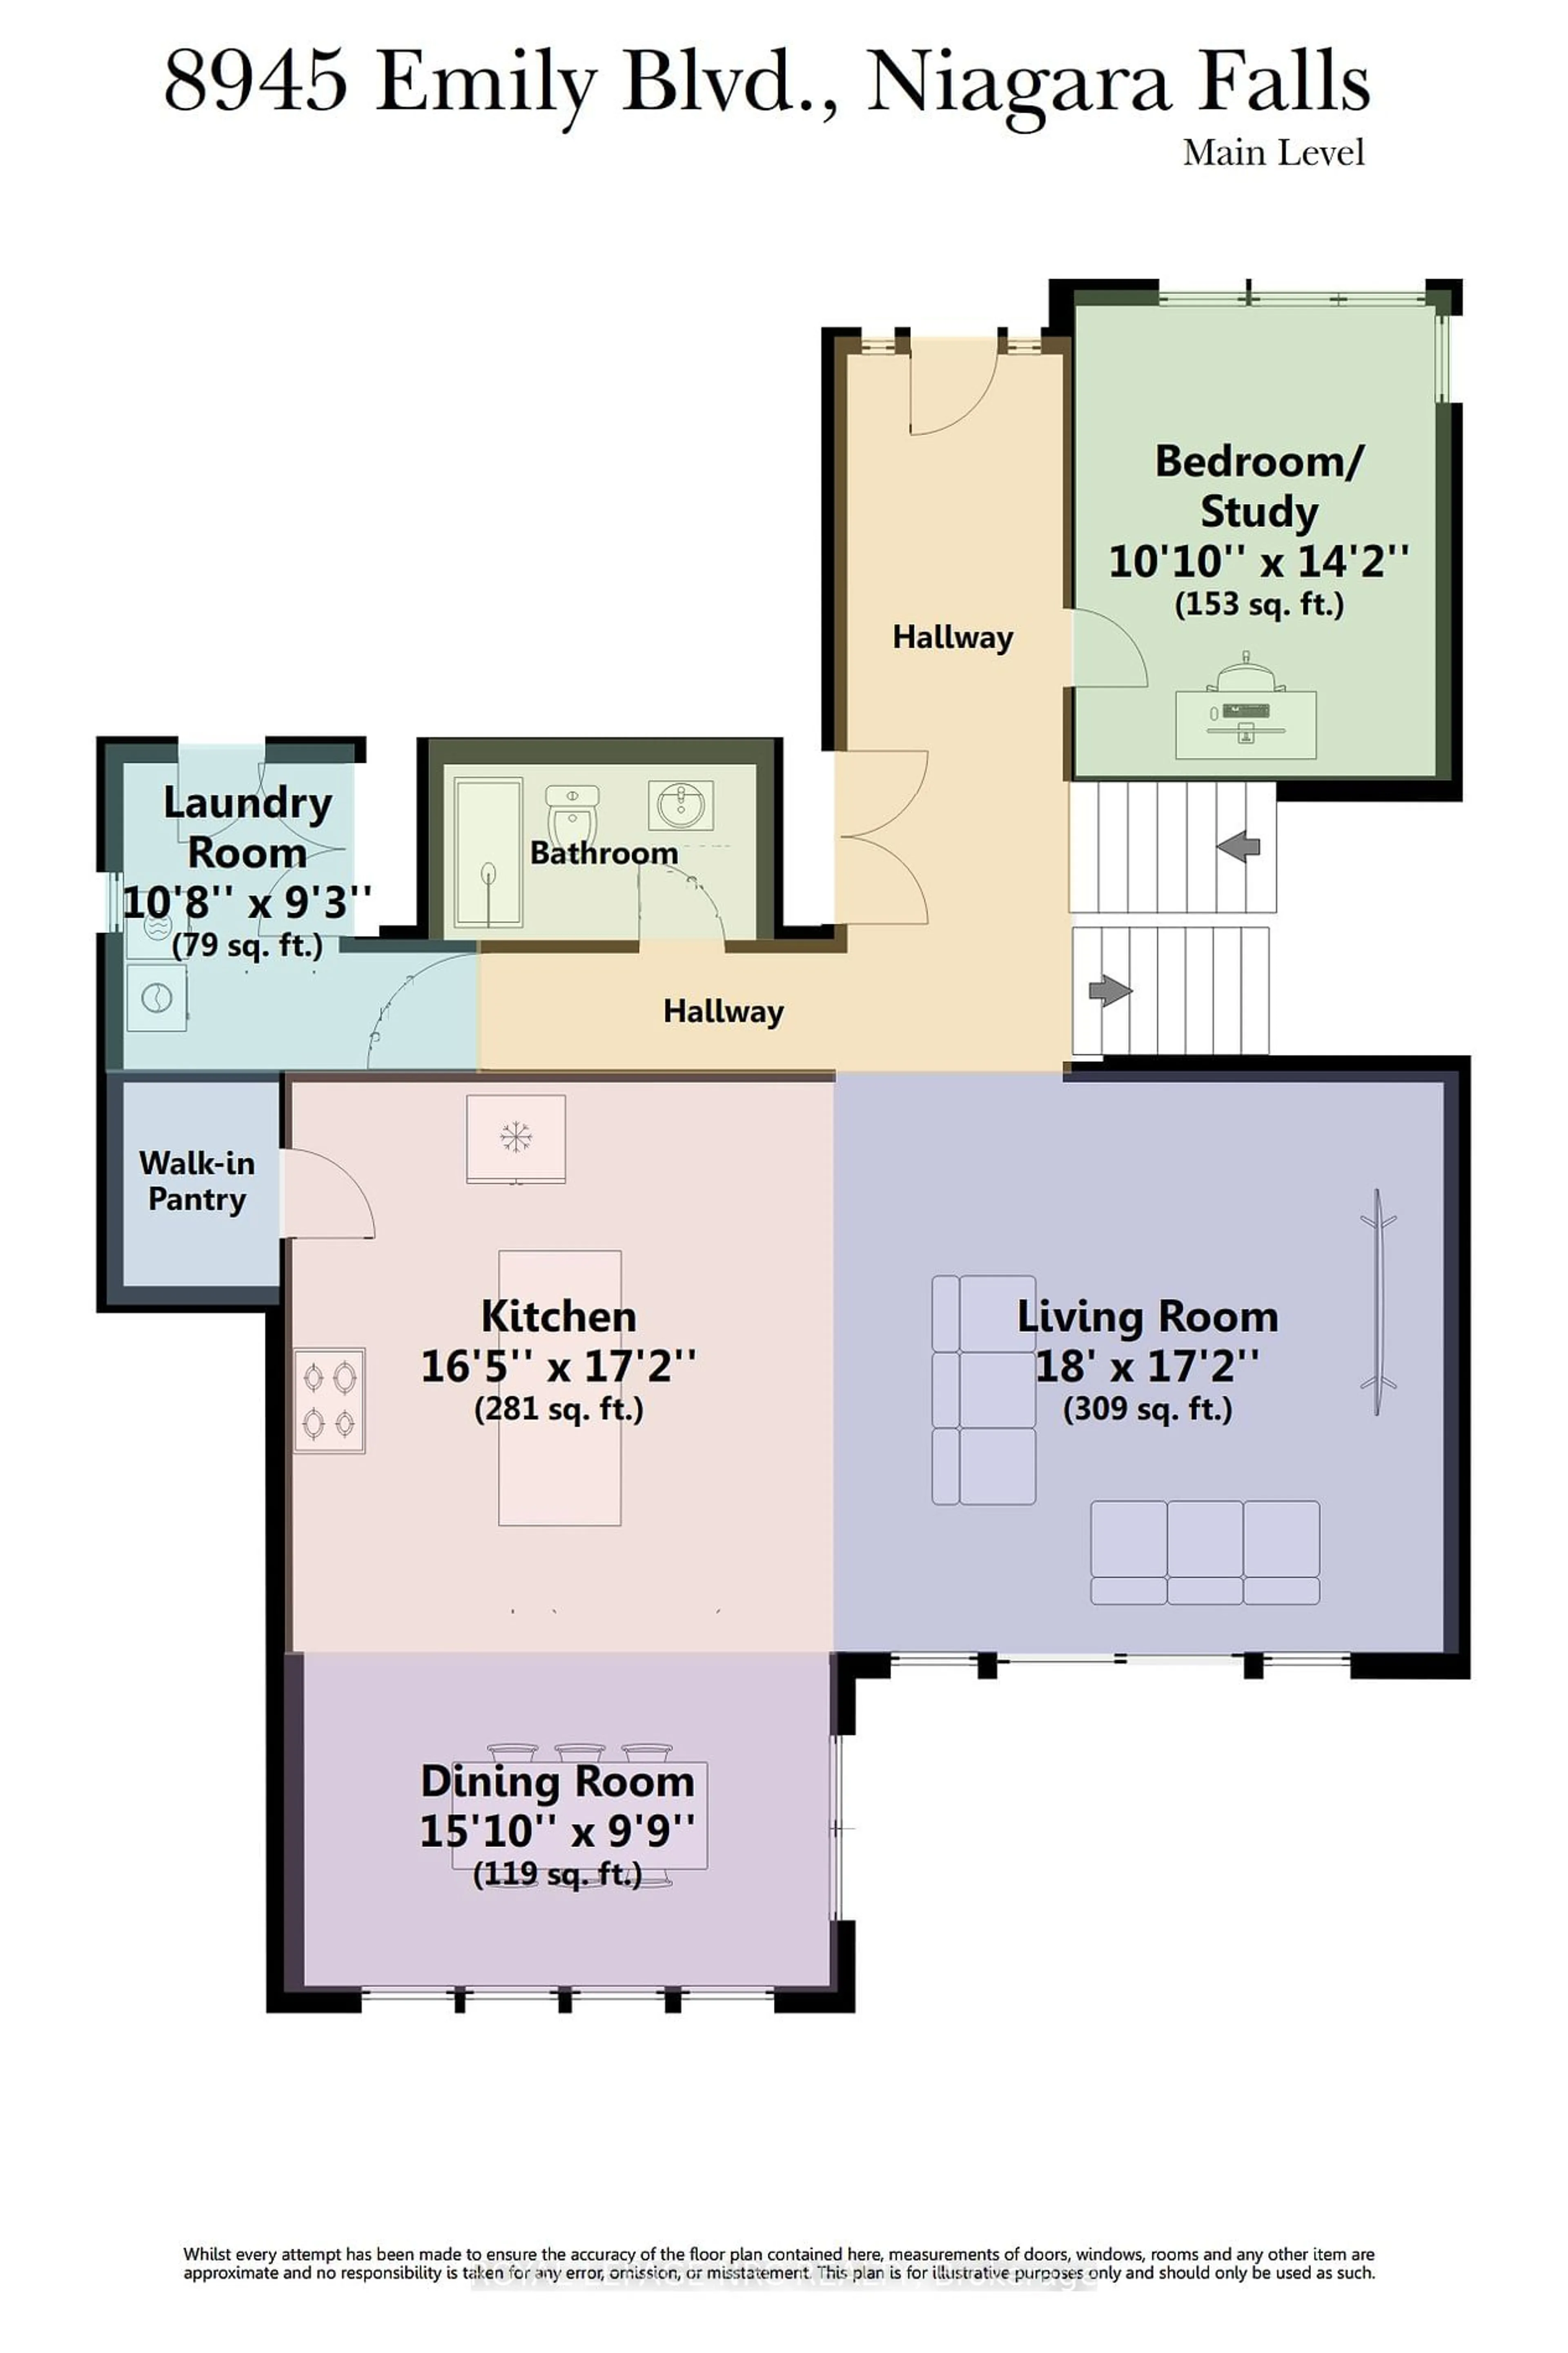 Floor plan for 8945 Emily Blvd, Niagara Falls Ontario L2H 3T1